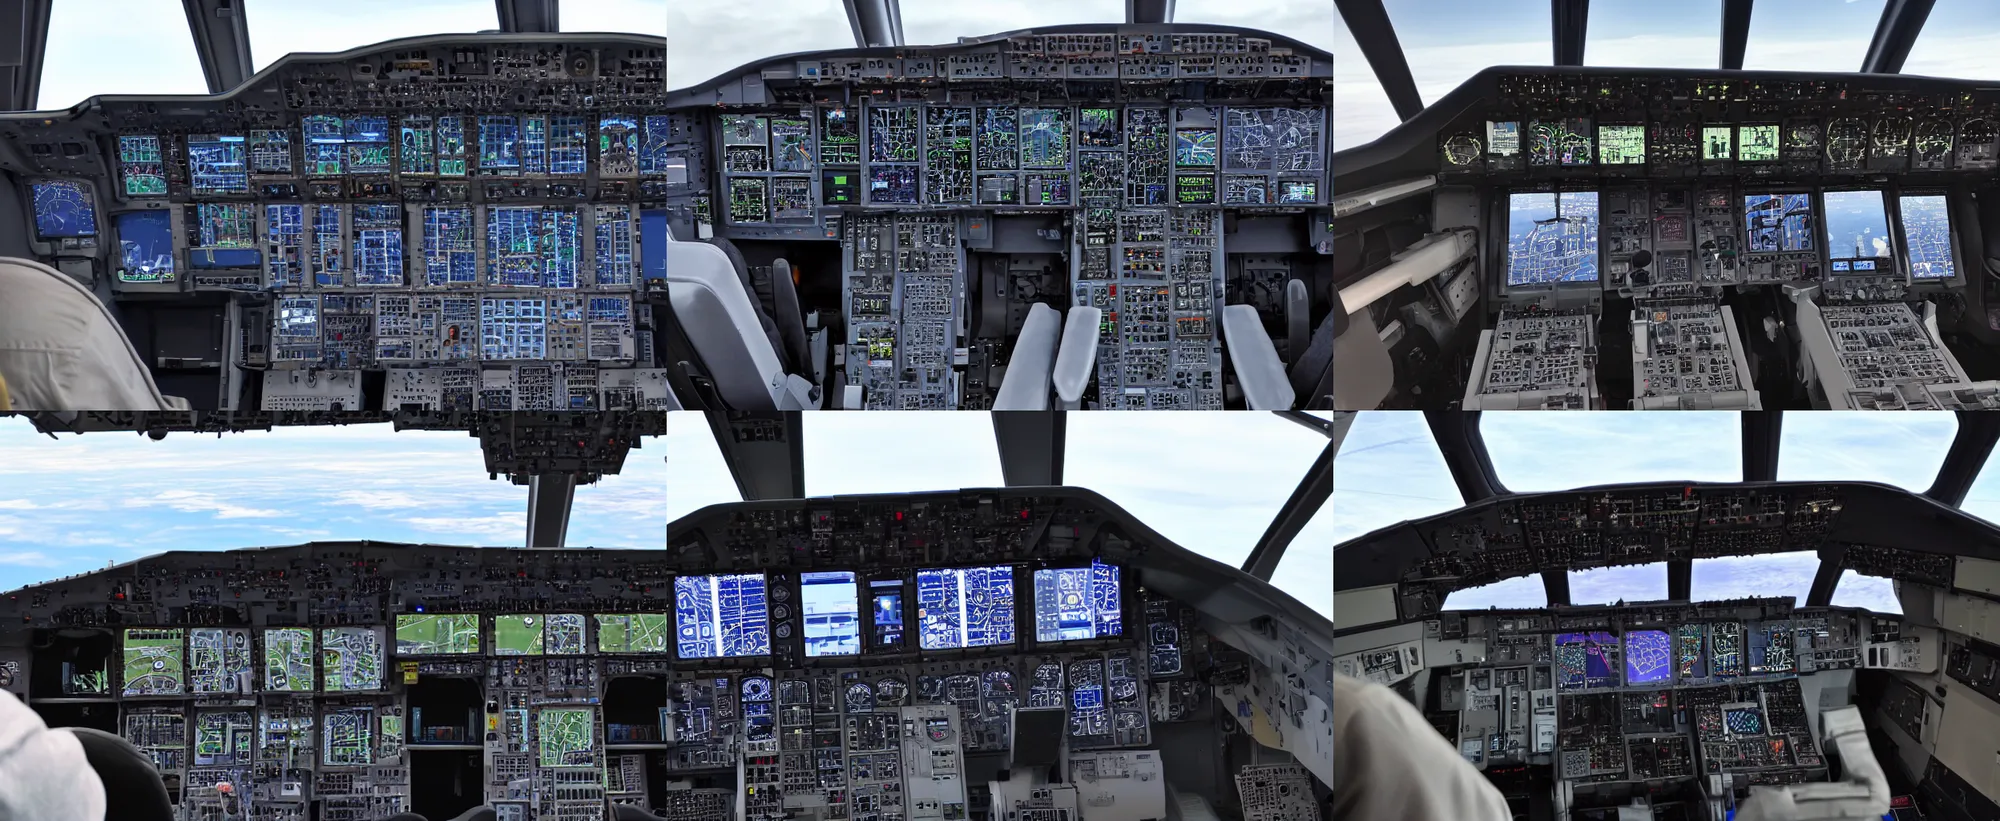 Prompt: Airbus A320 cockpit